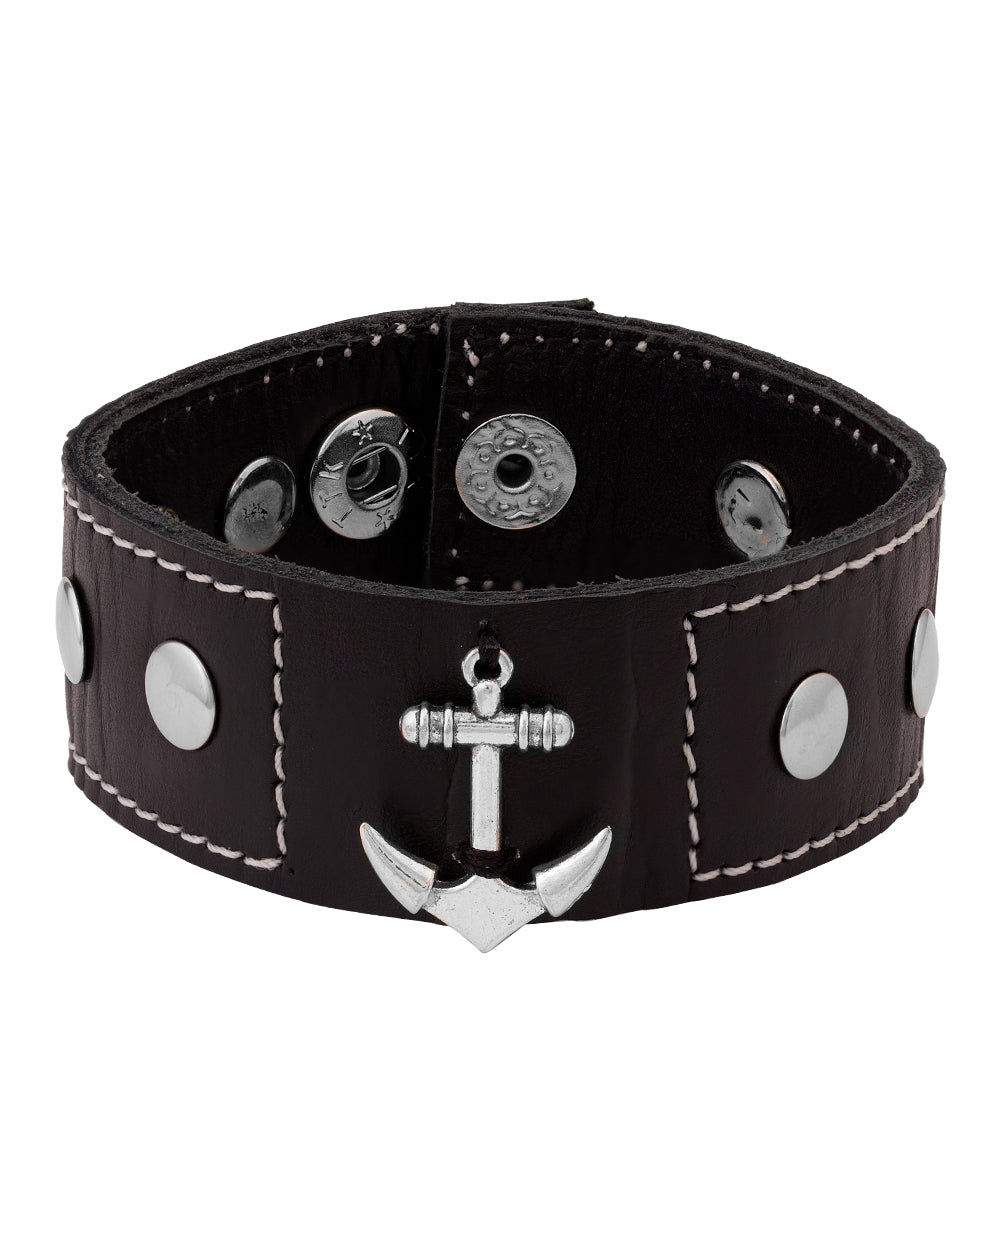 Dare By Voylla Black PU Leather Metallic Stud Studded Bracelet For Men -  Voylla - 3087805